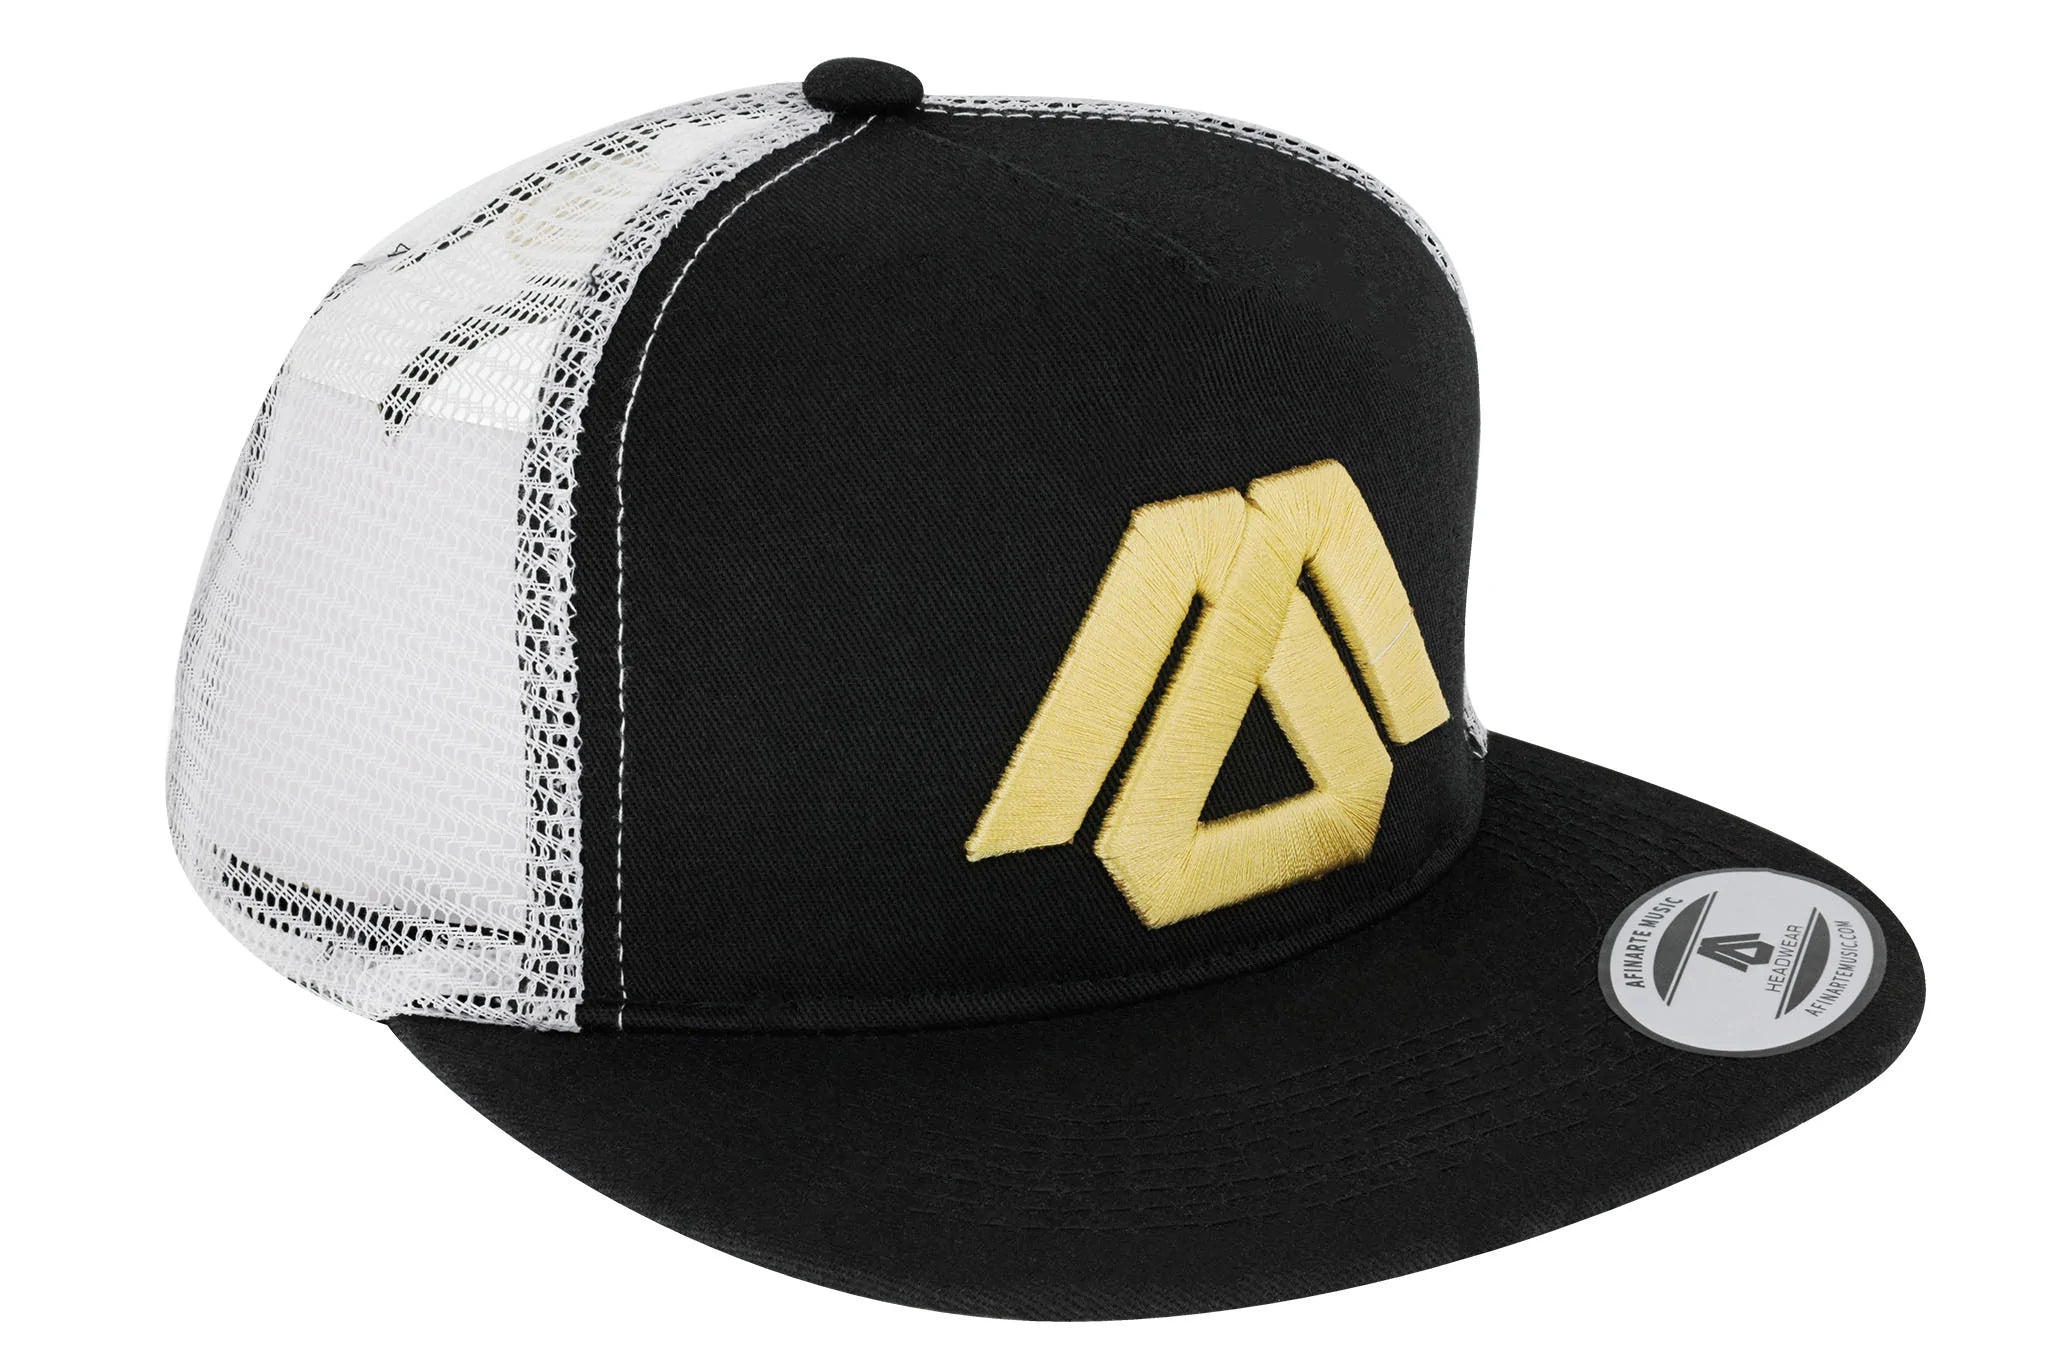 Afinarte Black & White + Gold Hat